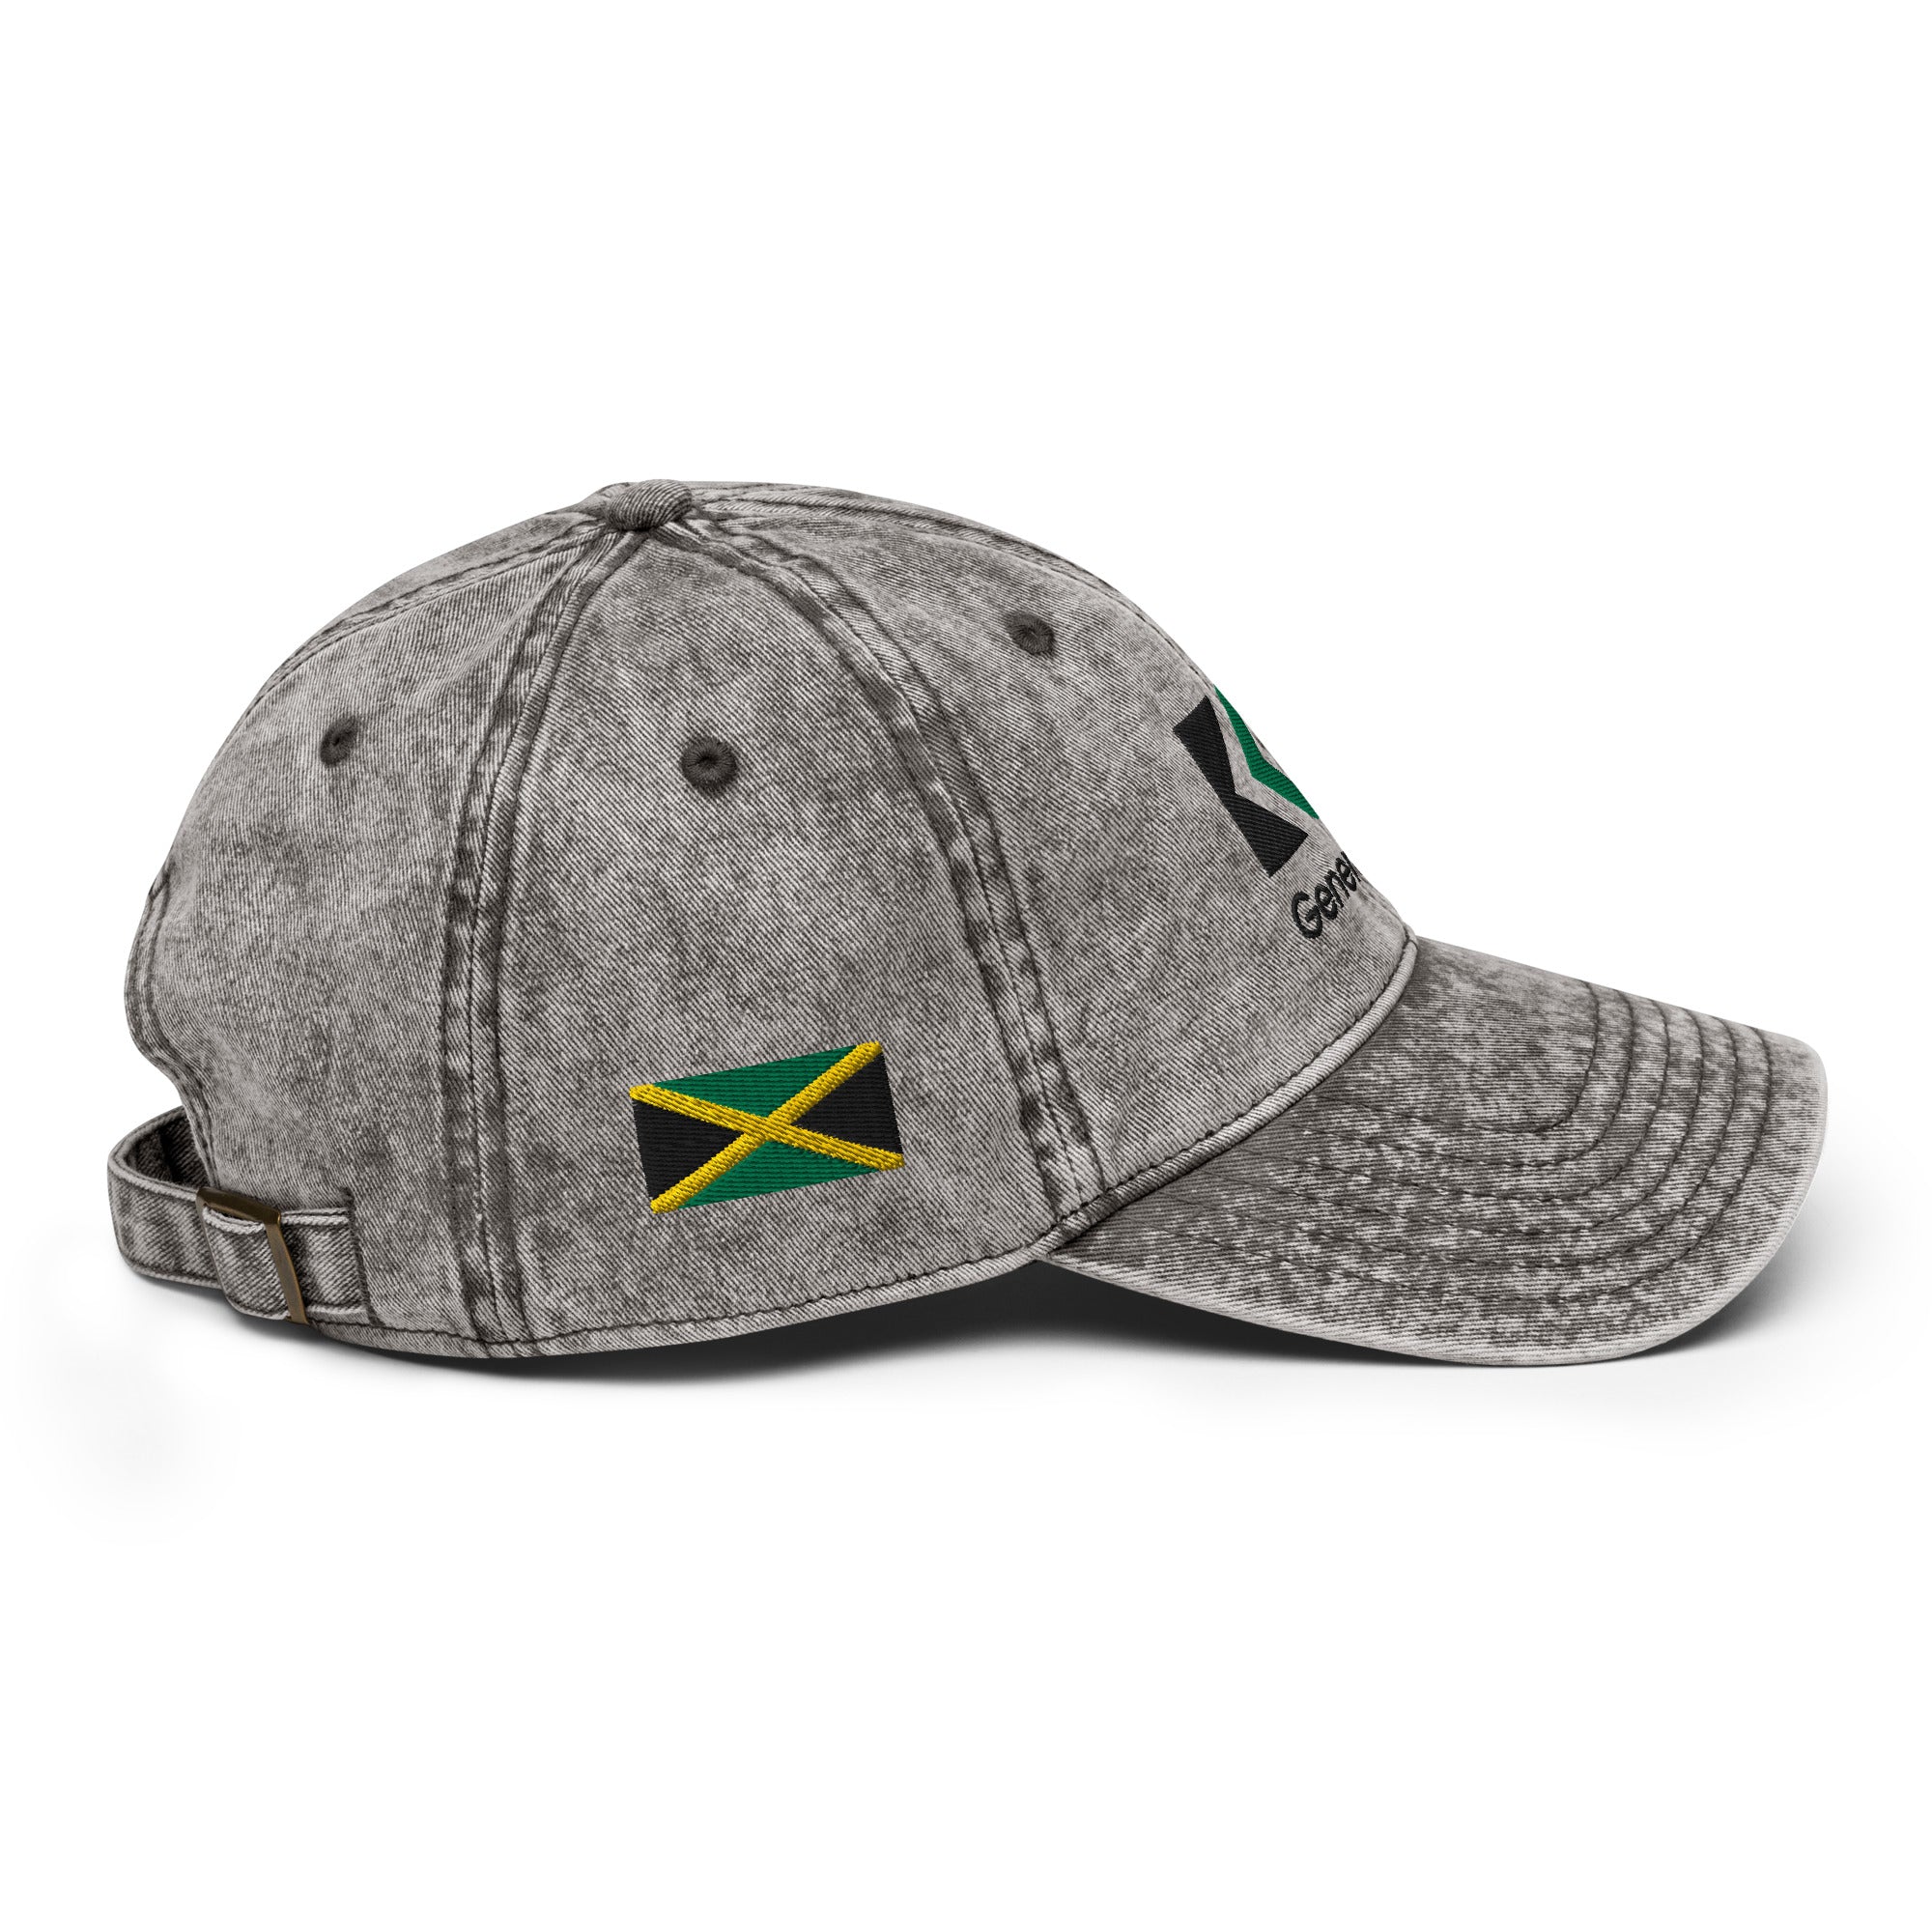 🇯🇲 Jamaica Vintage Cotton Twill Cap